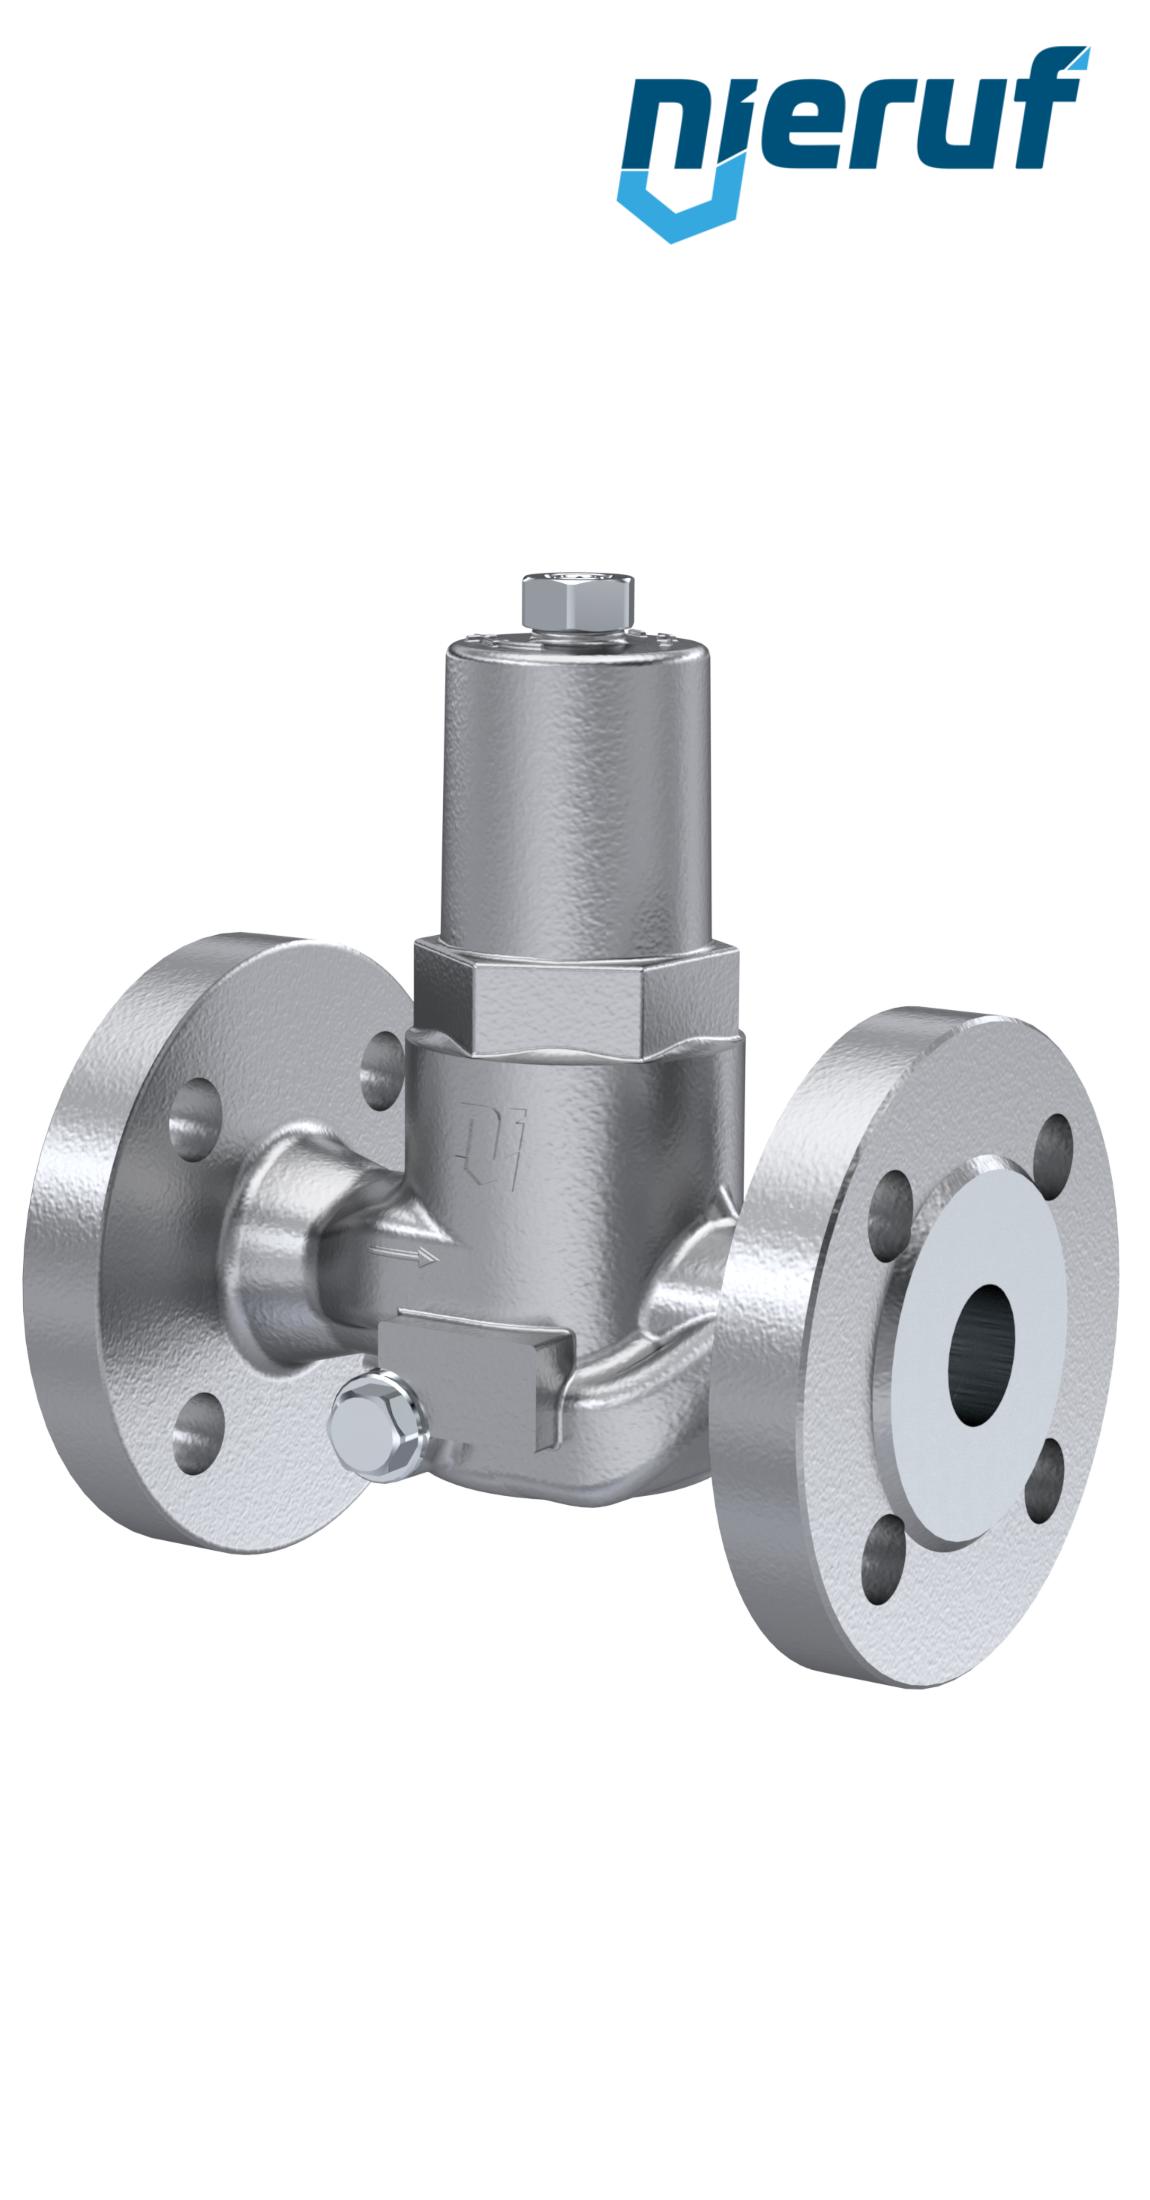 Flange-pressure reducing valve DN25 DM13 flange ANSI 150 stainless steel FPM / FKM 1.5 - 6.0 bar